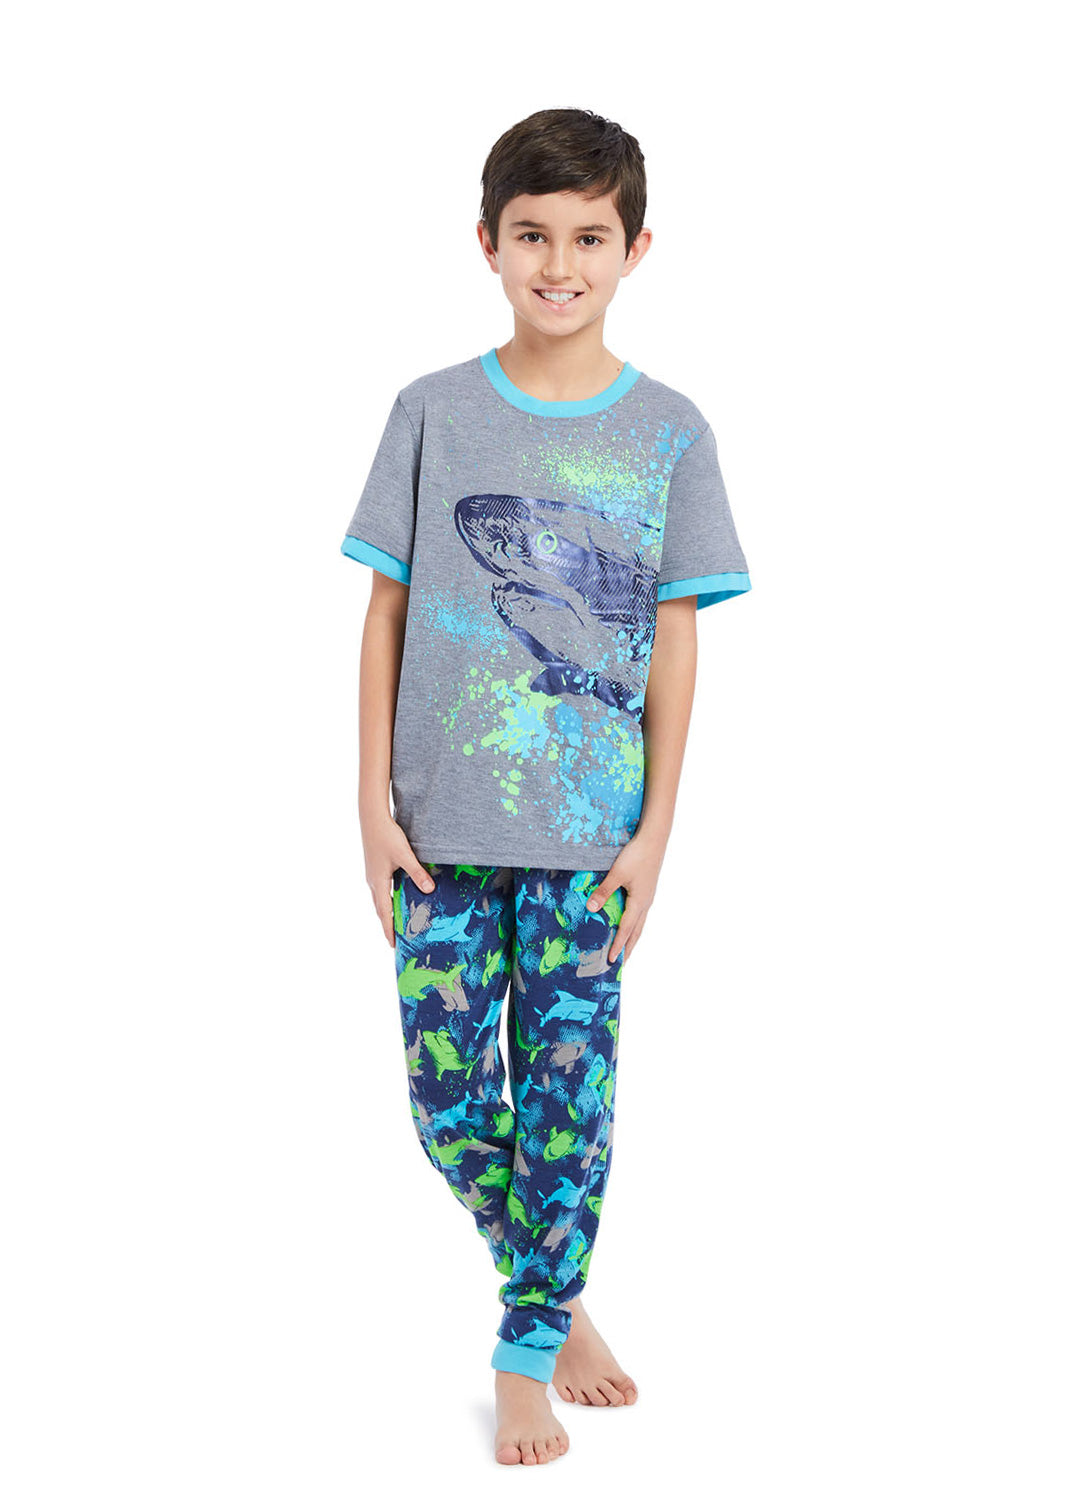 Boy wearing Pajama set Shark, t-shirt (gray) with print and pants (blue) with prints